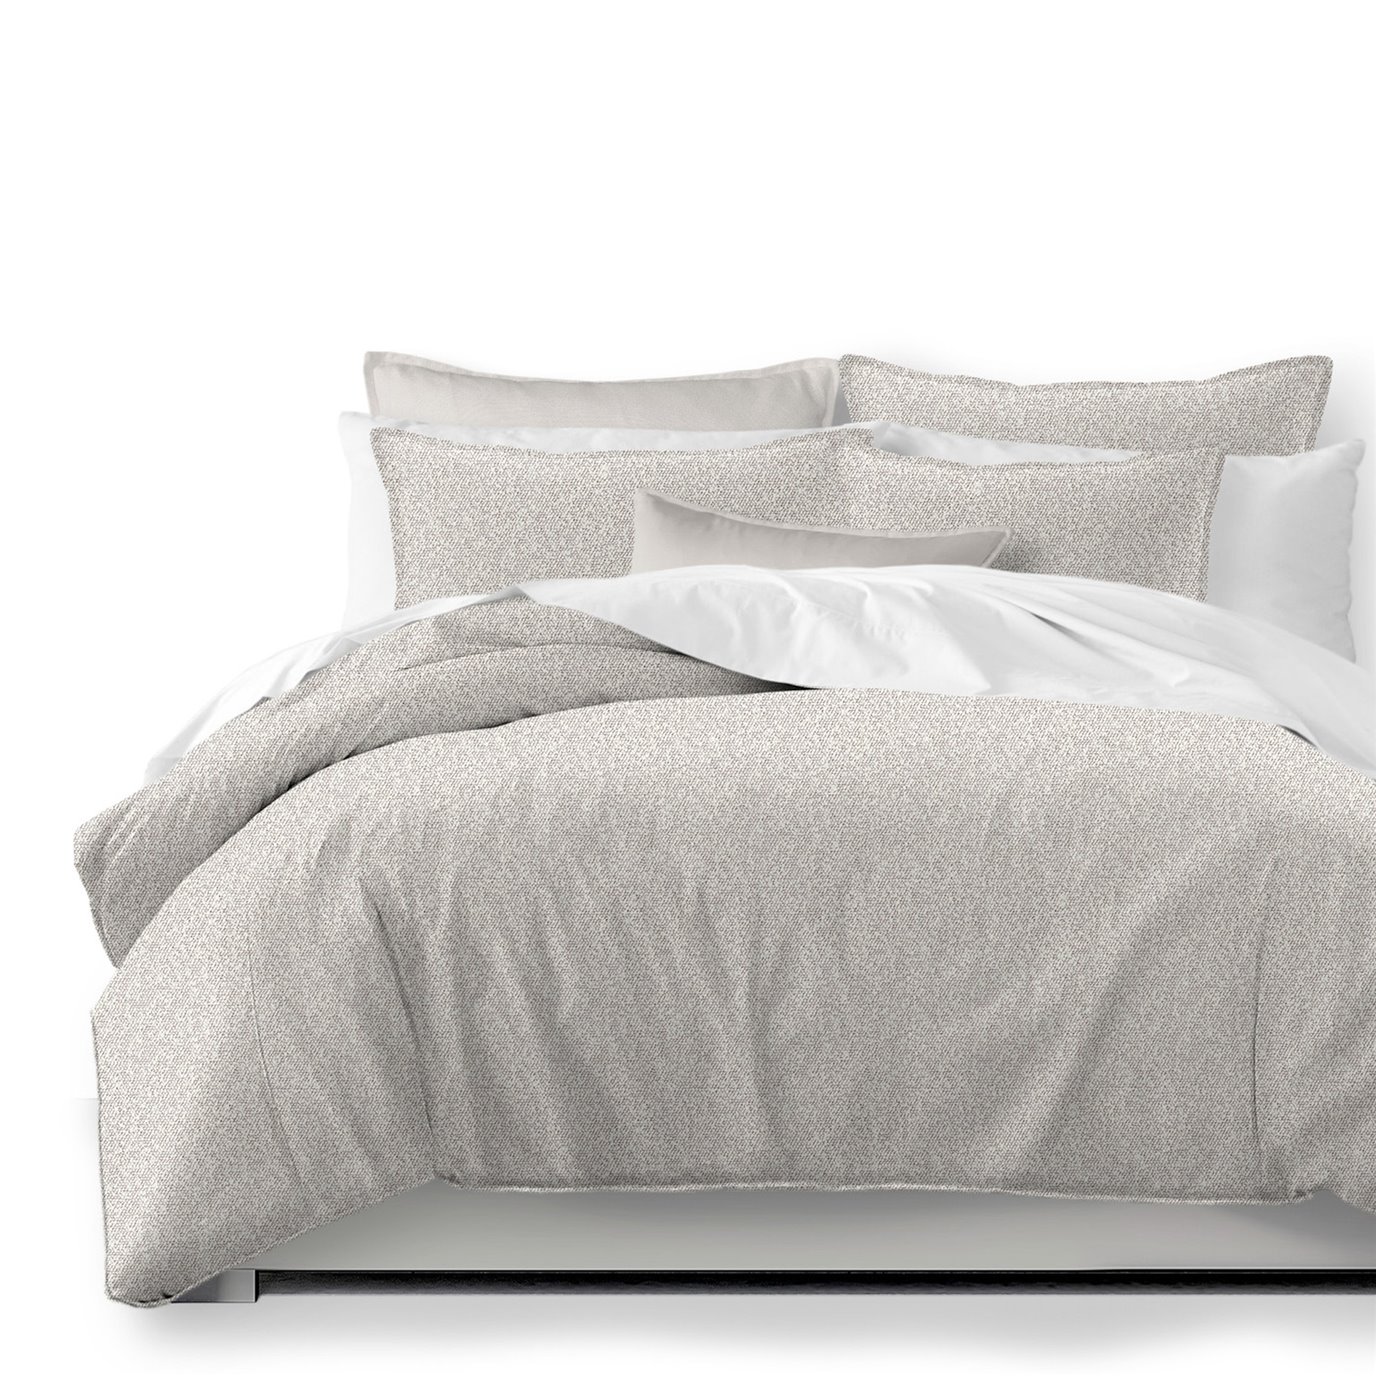 Jackson Boucle Cream Comforter and Pillow Sham(s) Set - Size Super Queen